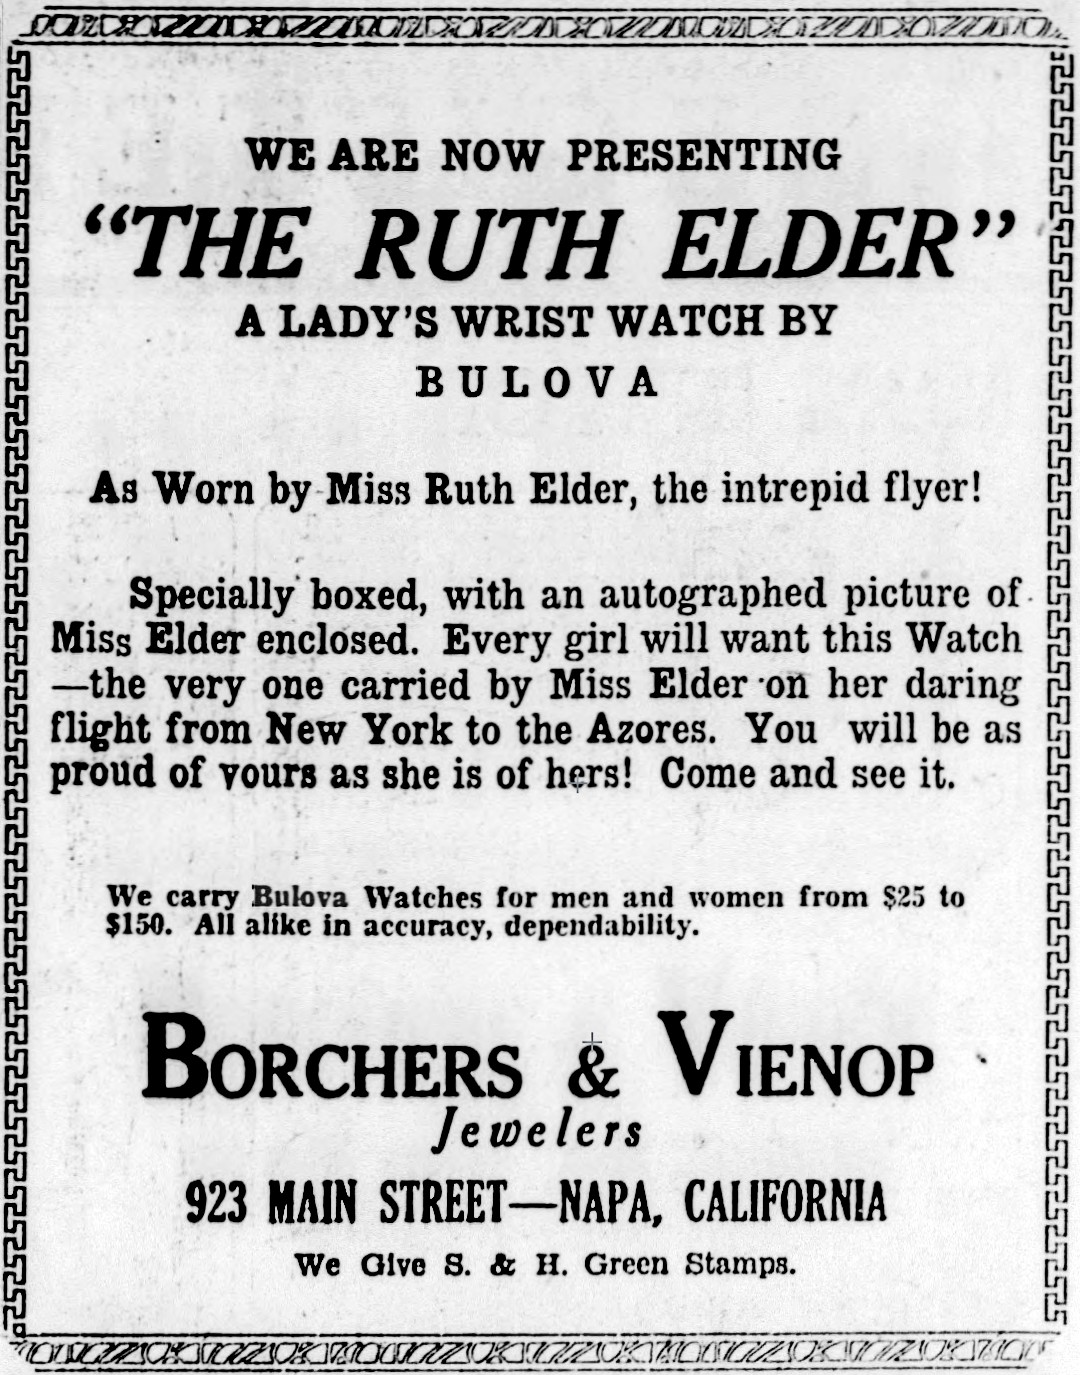 7 November 1927 - The Rut Elder watch